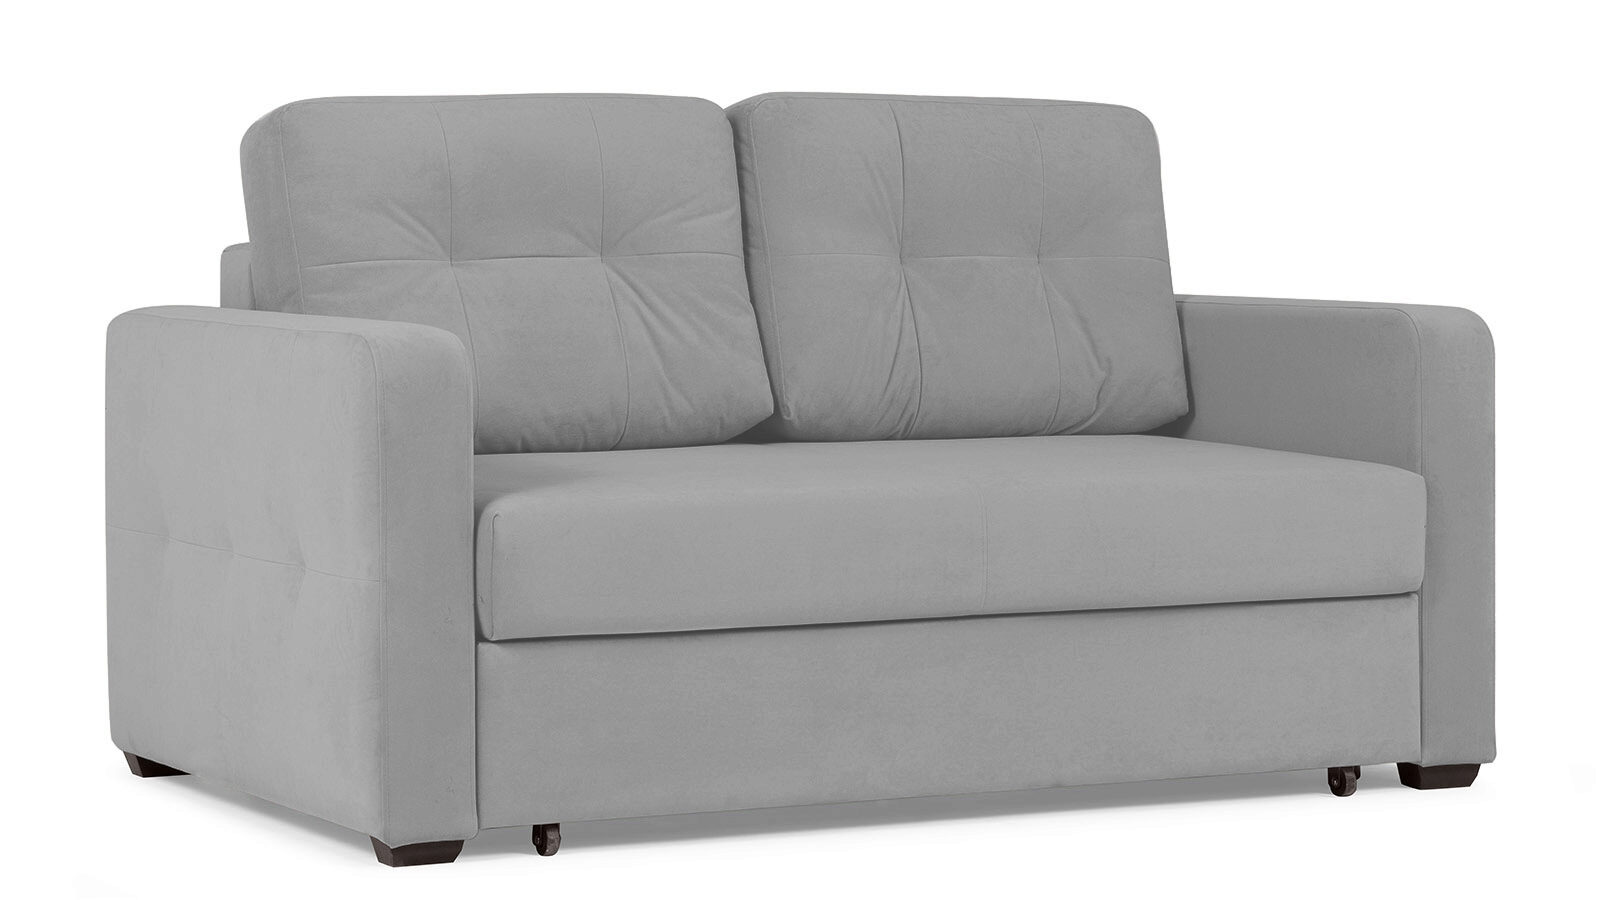 прямой диван loko mini c широкими подлокотниками Прямой диван Loko MINI c широкими подлокотниками